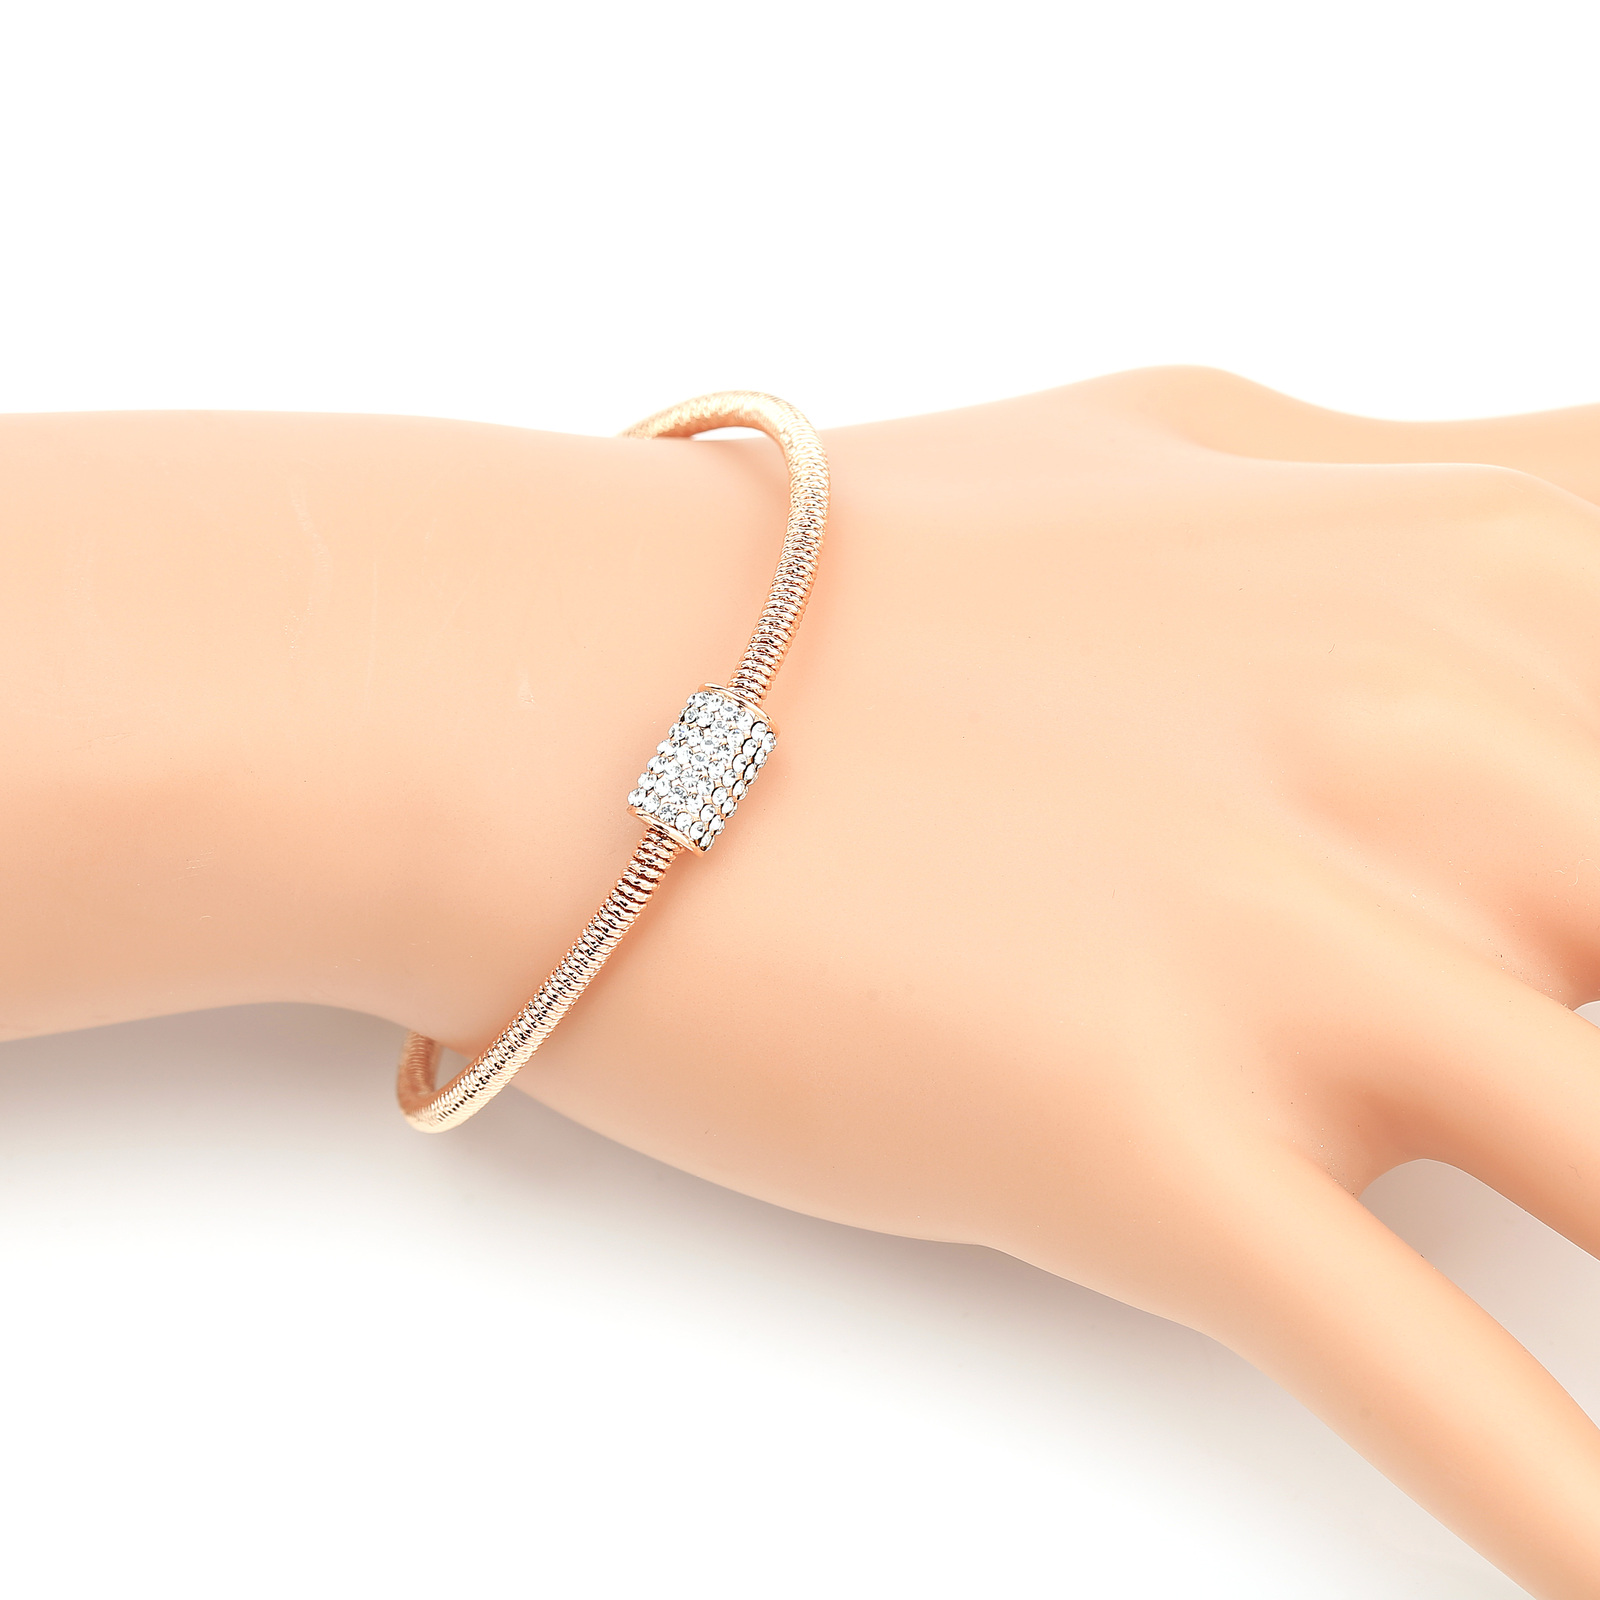 rose tone wrap bangle bracelet with swarovski style crystals